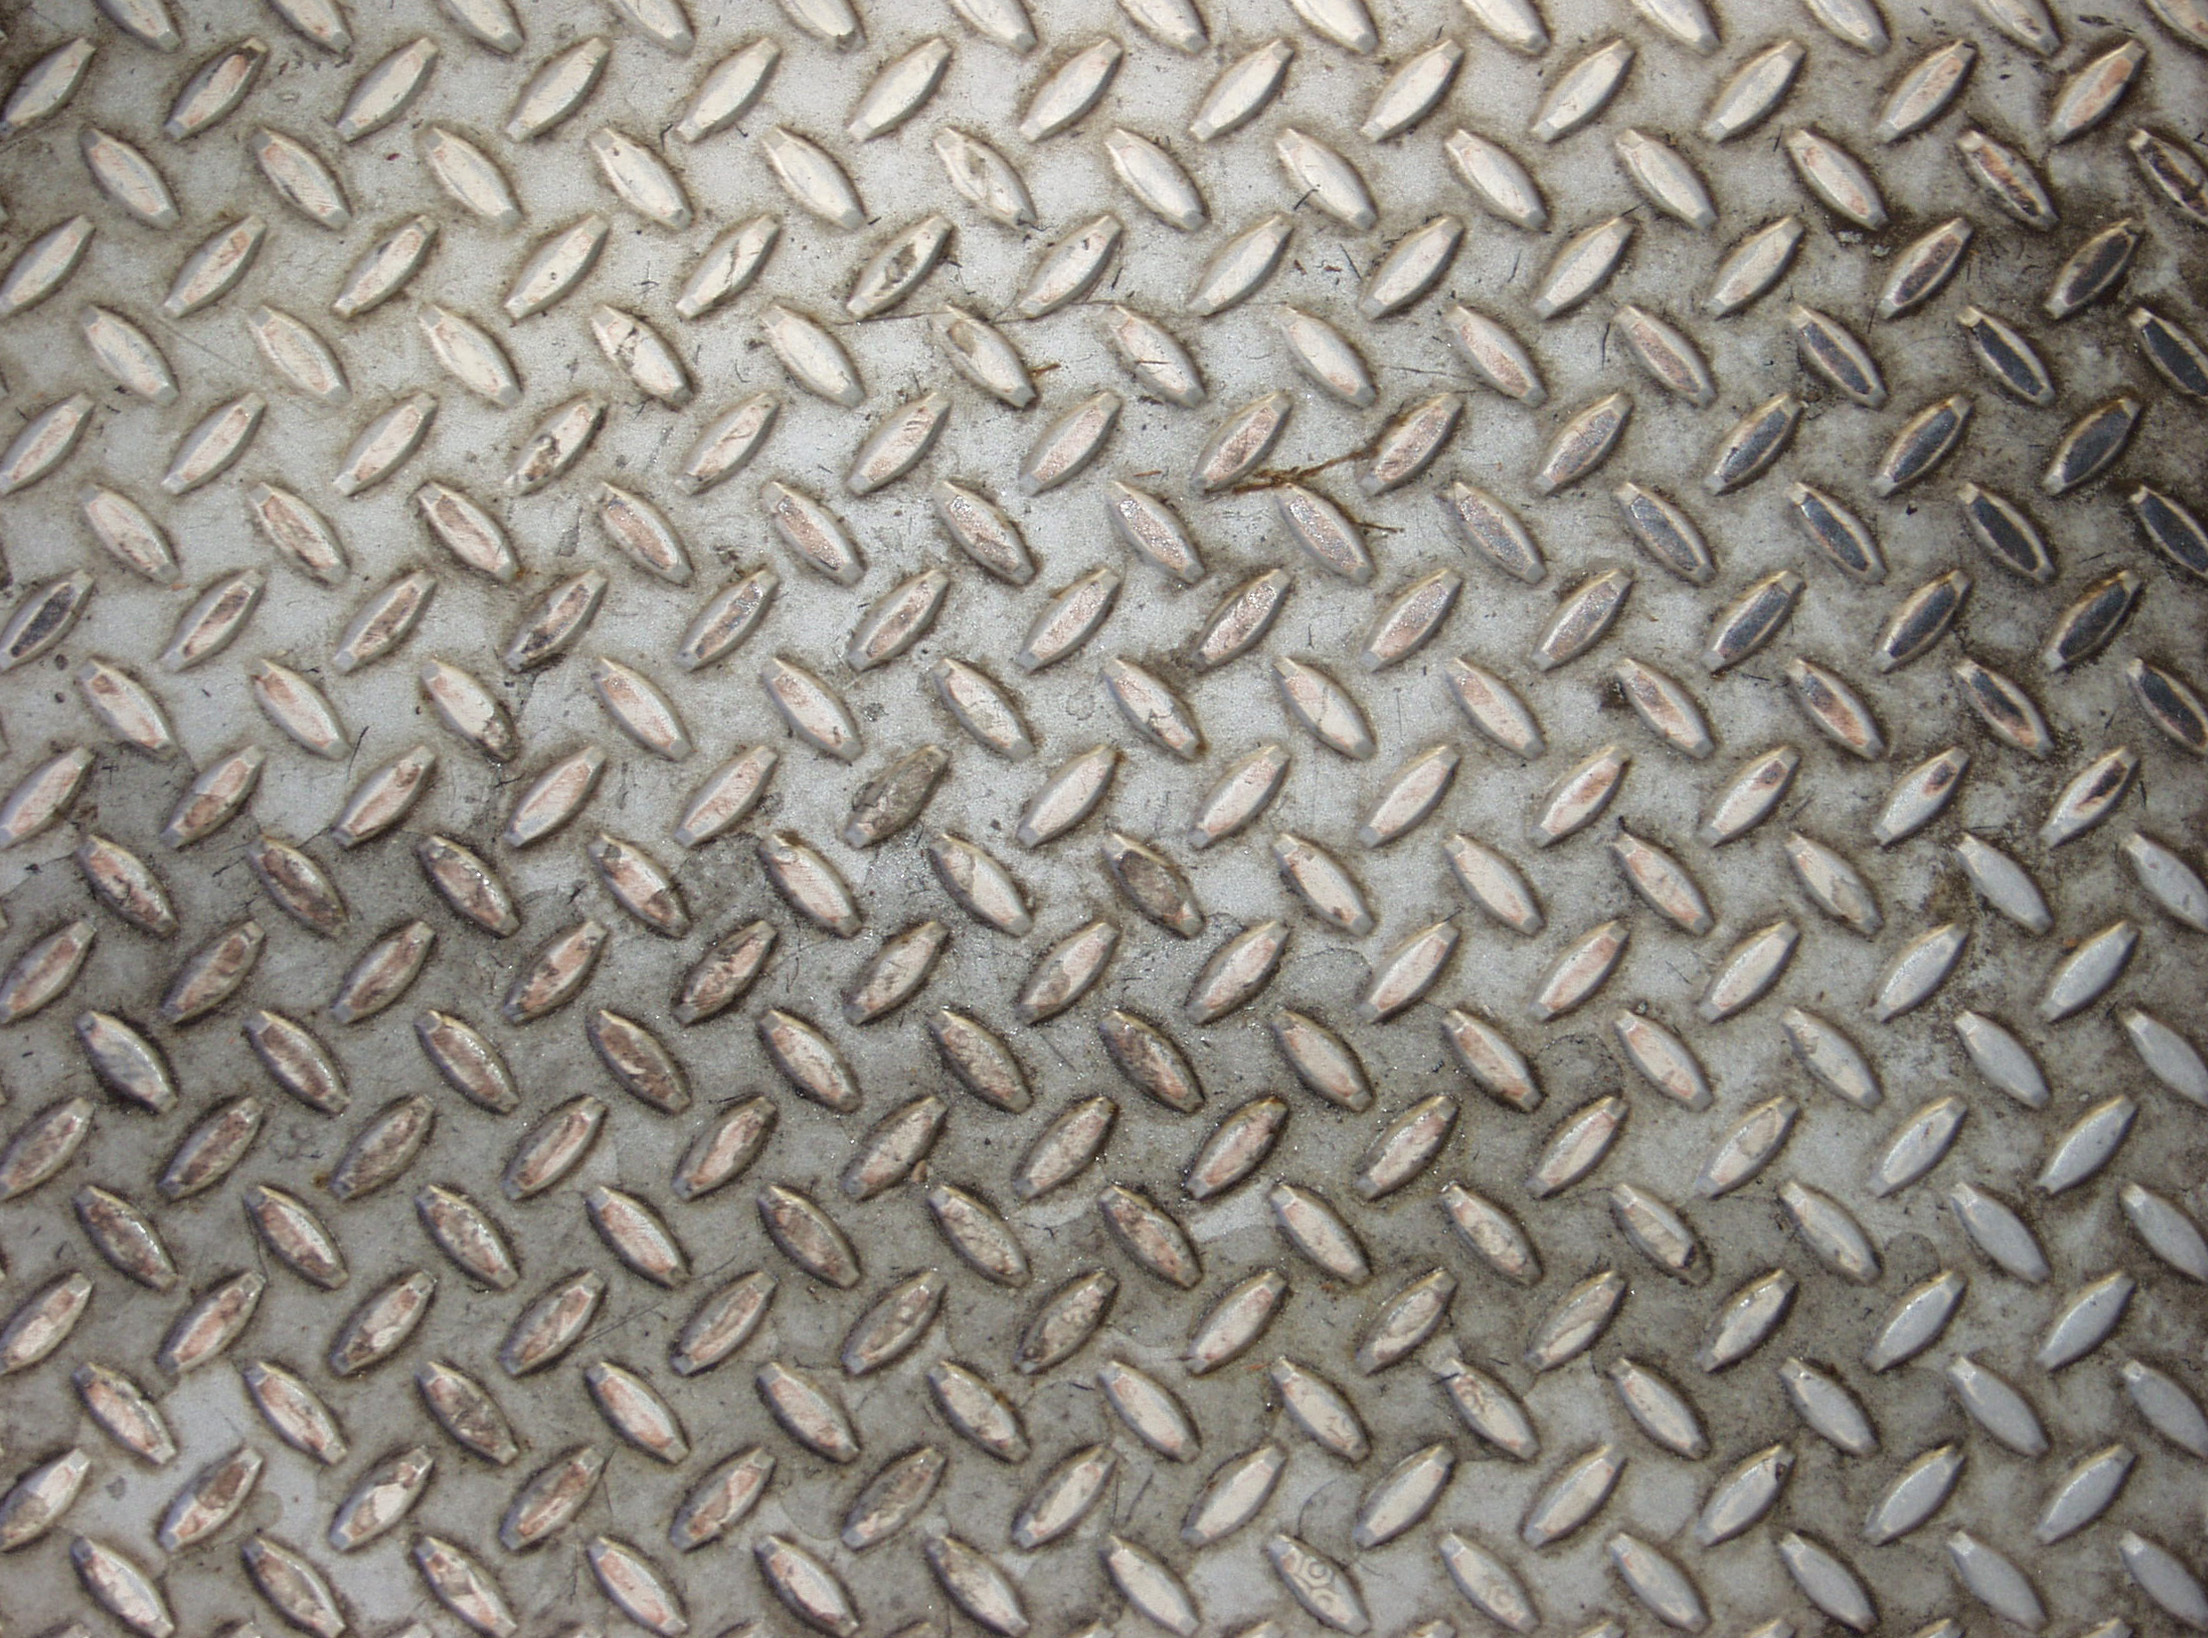 patterns in metal